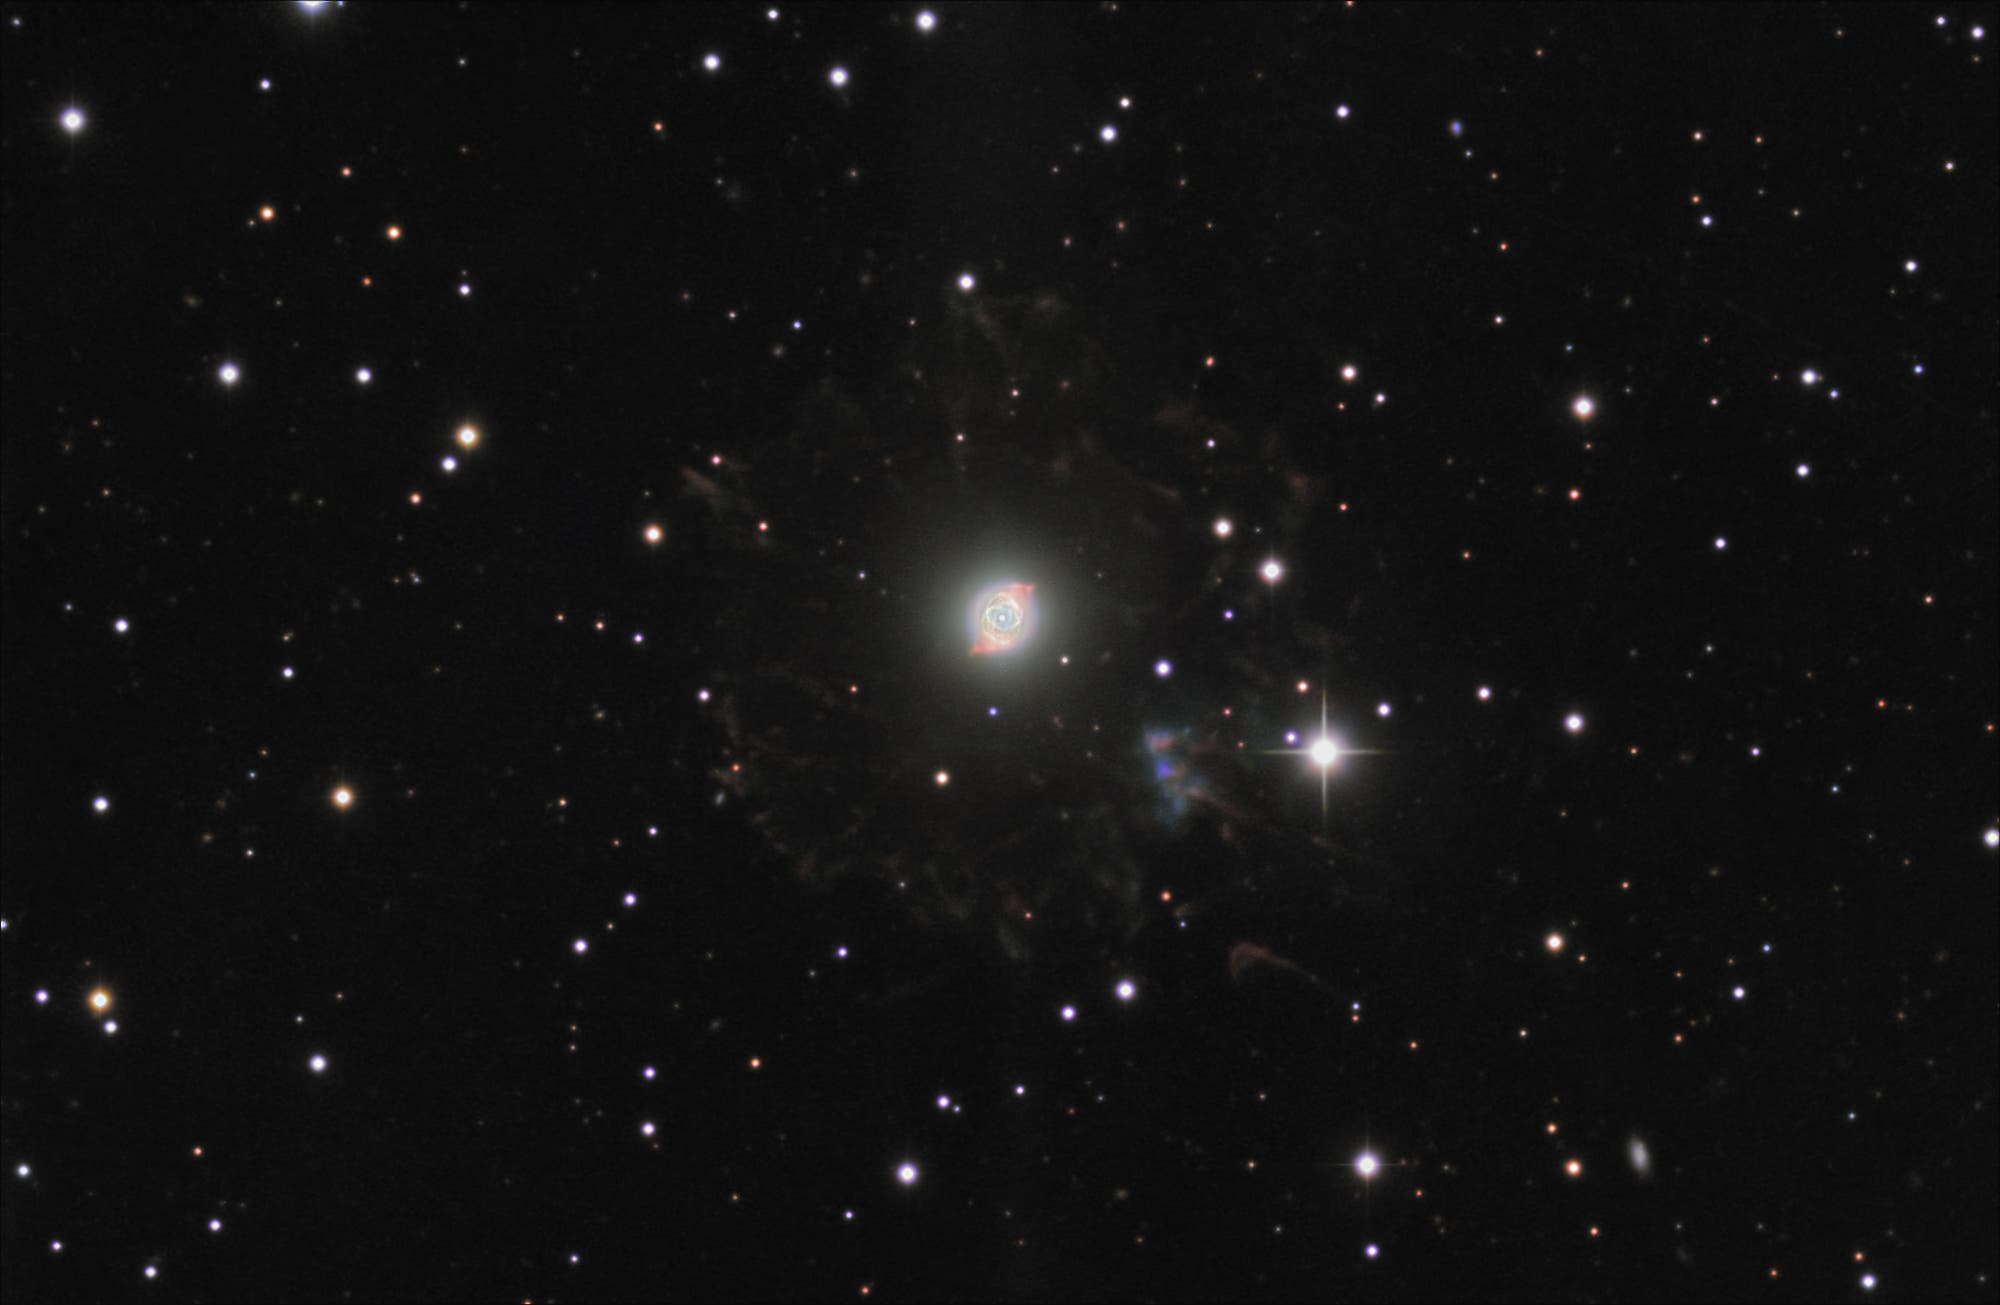 NGC6543 The Cat's Eye Nebula